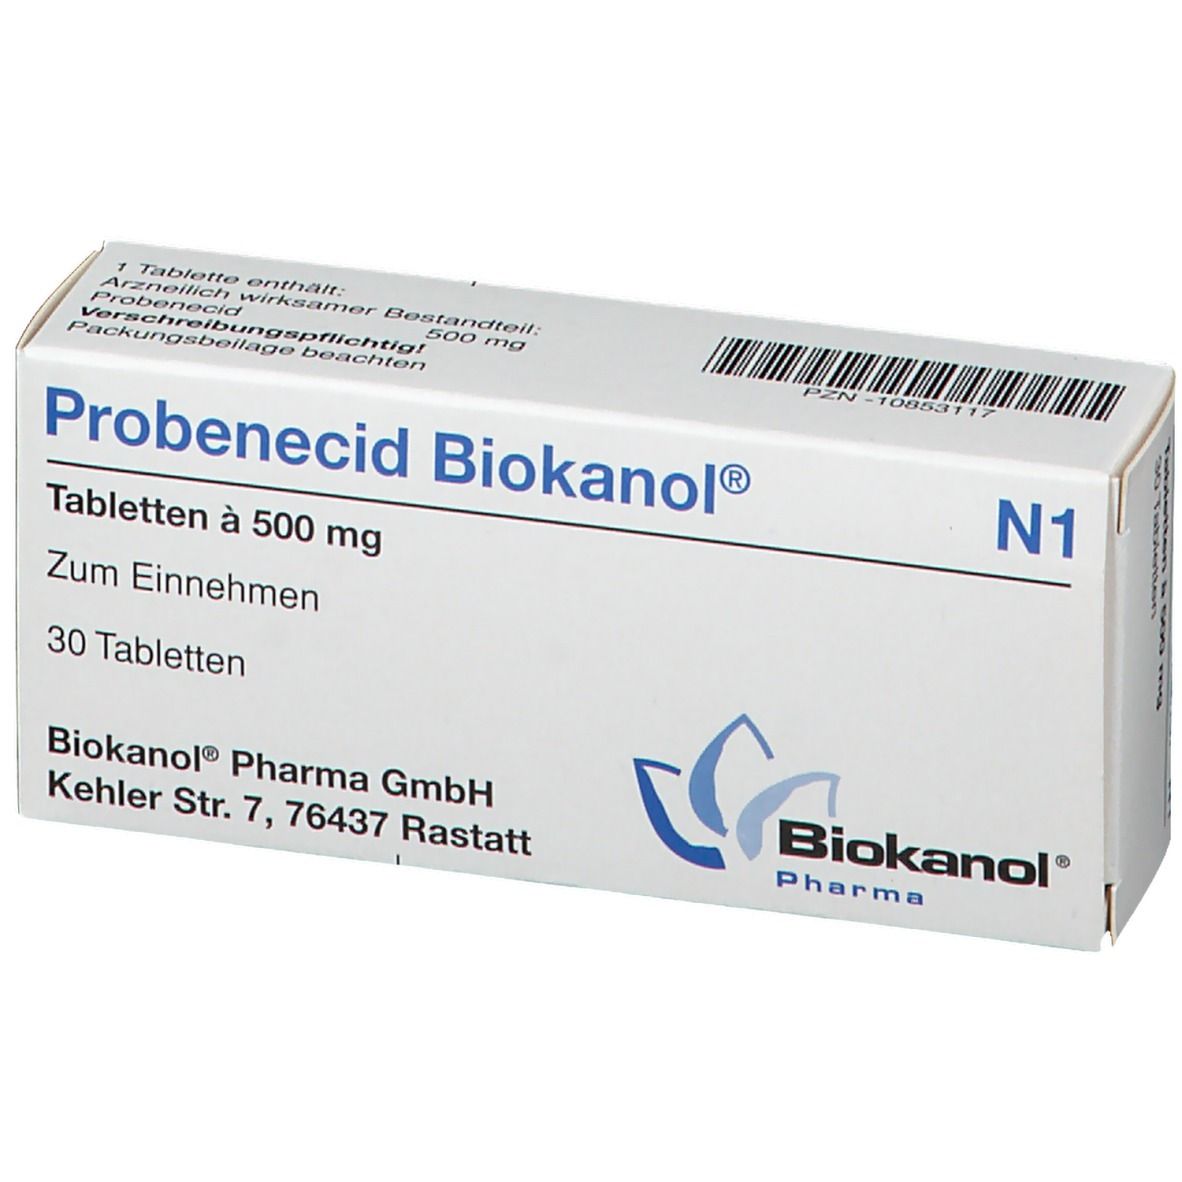 Probenecid Biokanol® 500 mg